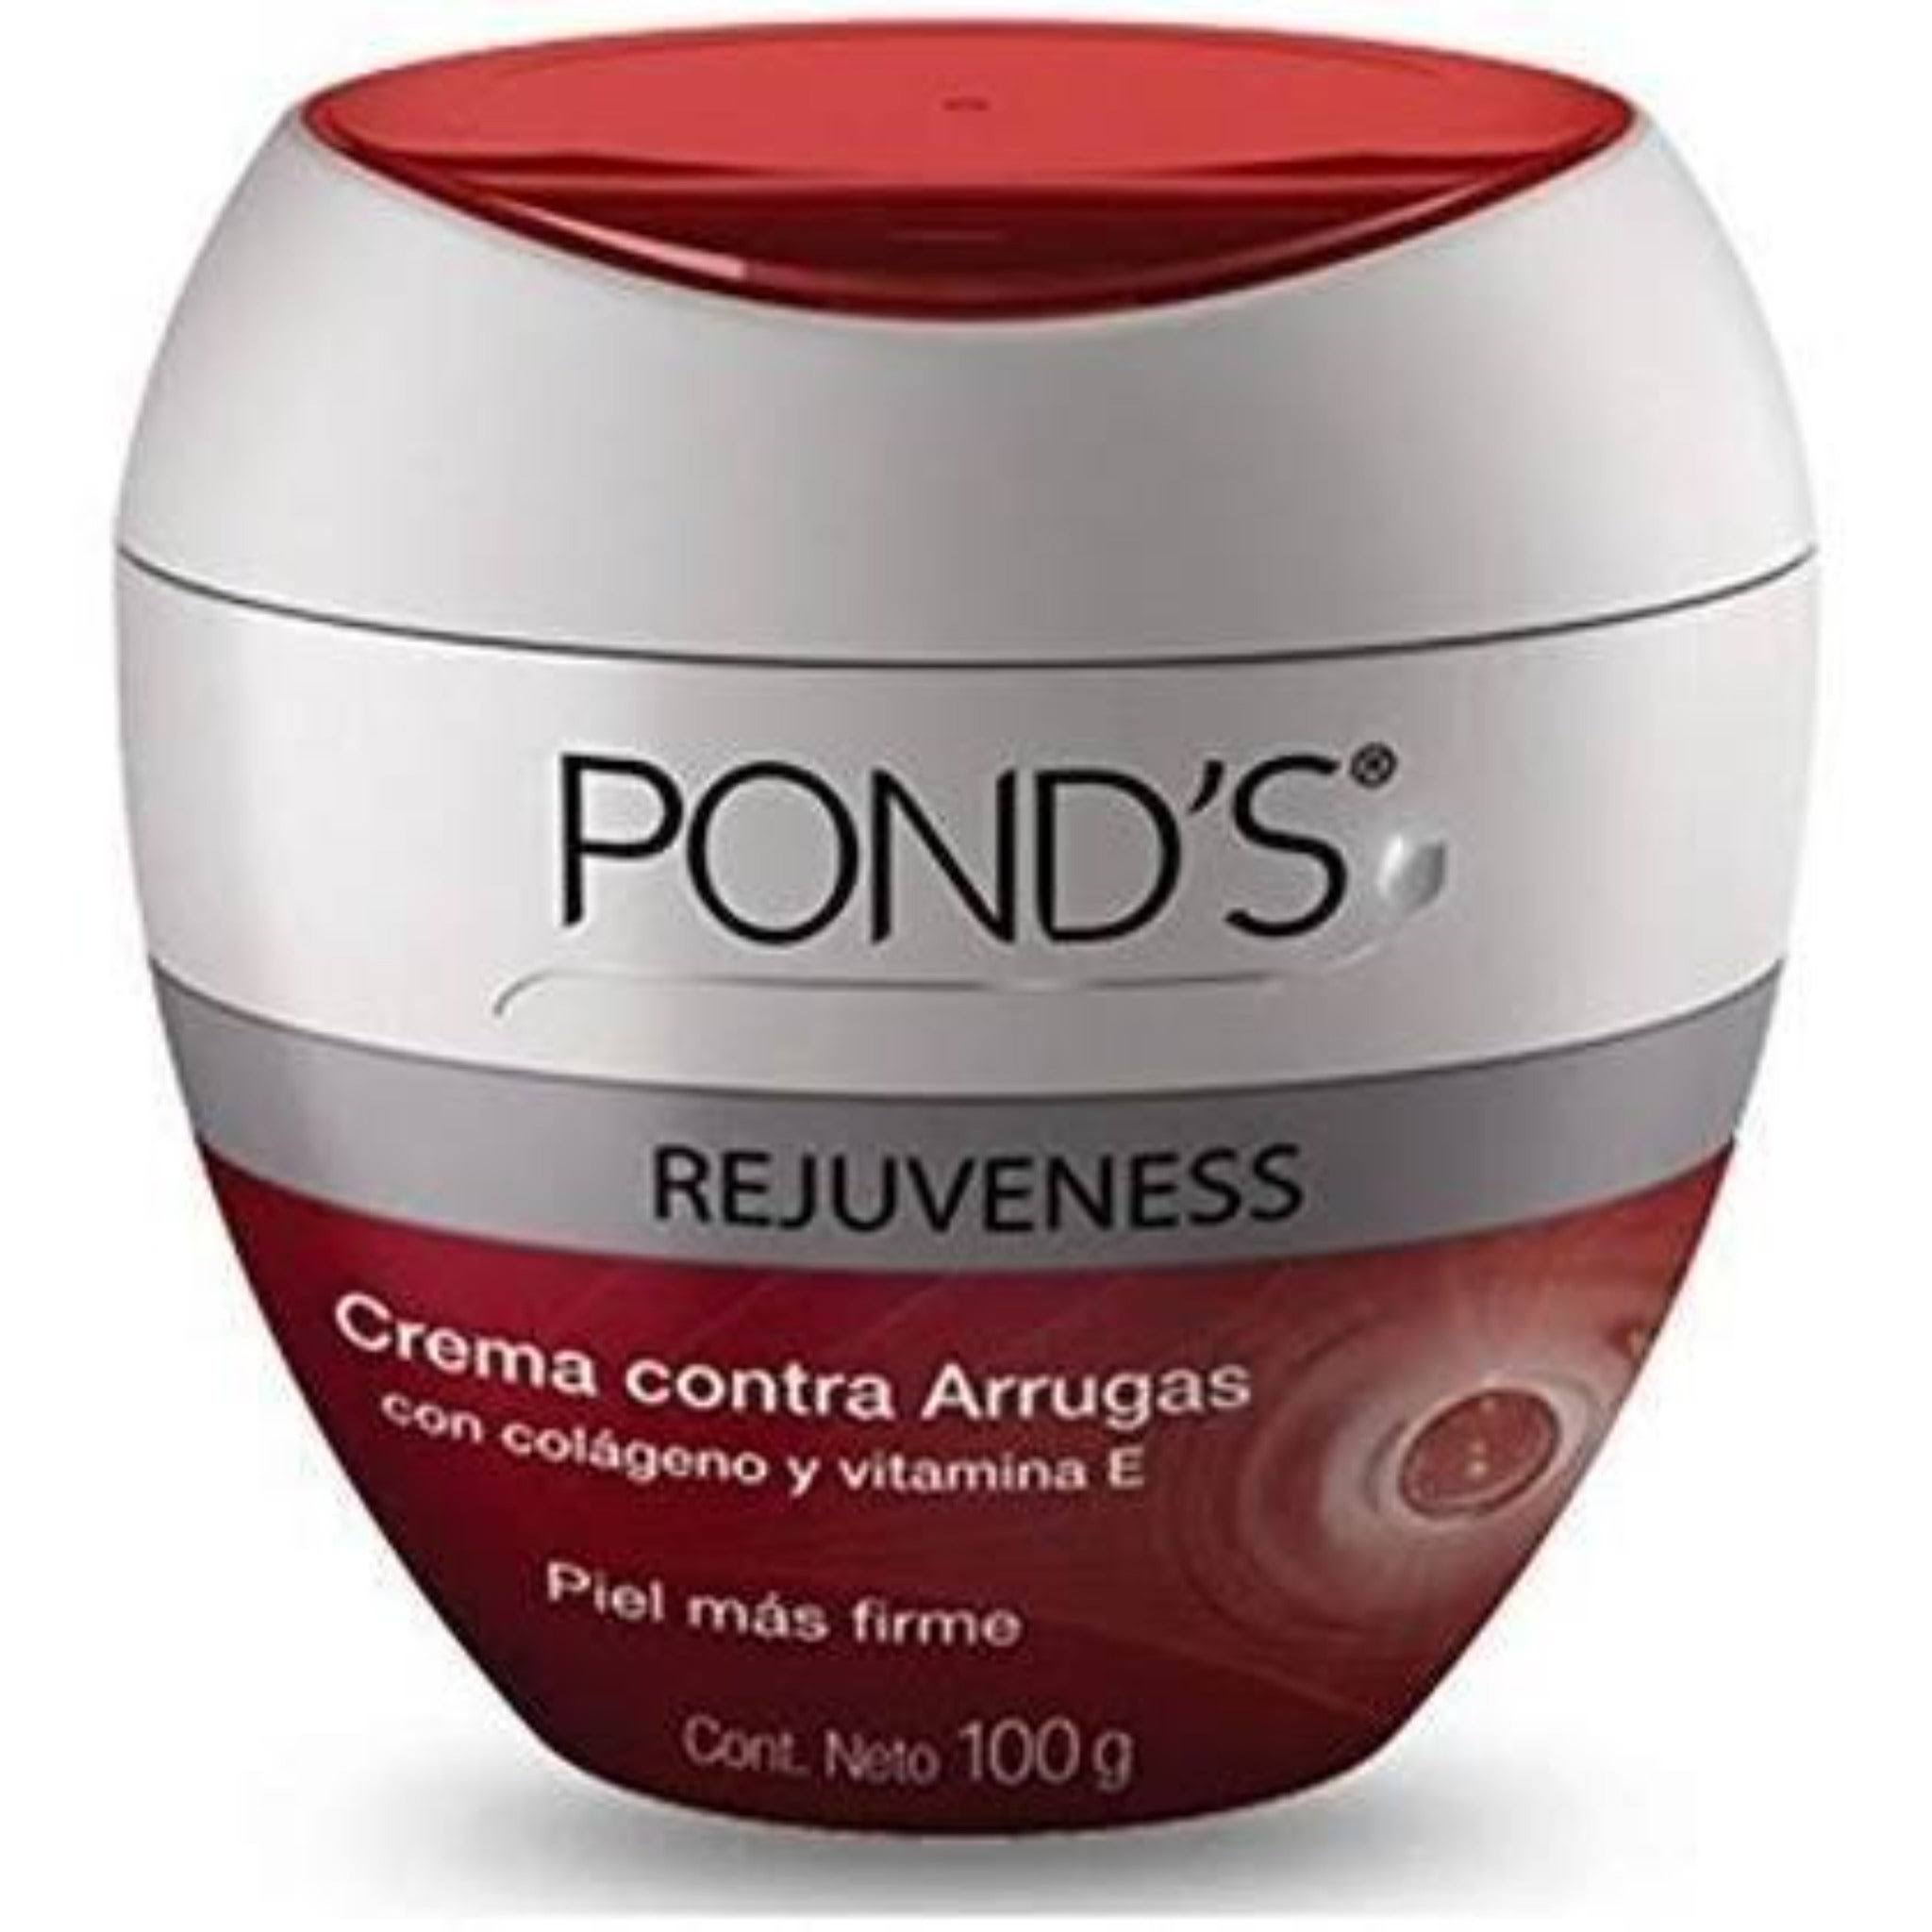 Ponds Rejuveness Night Time Wrinkle Cream - 100g